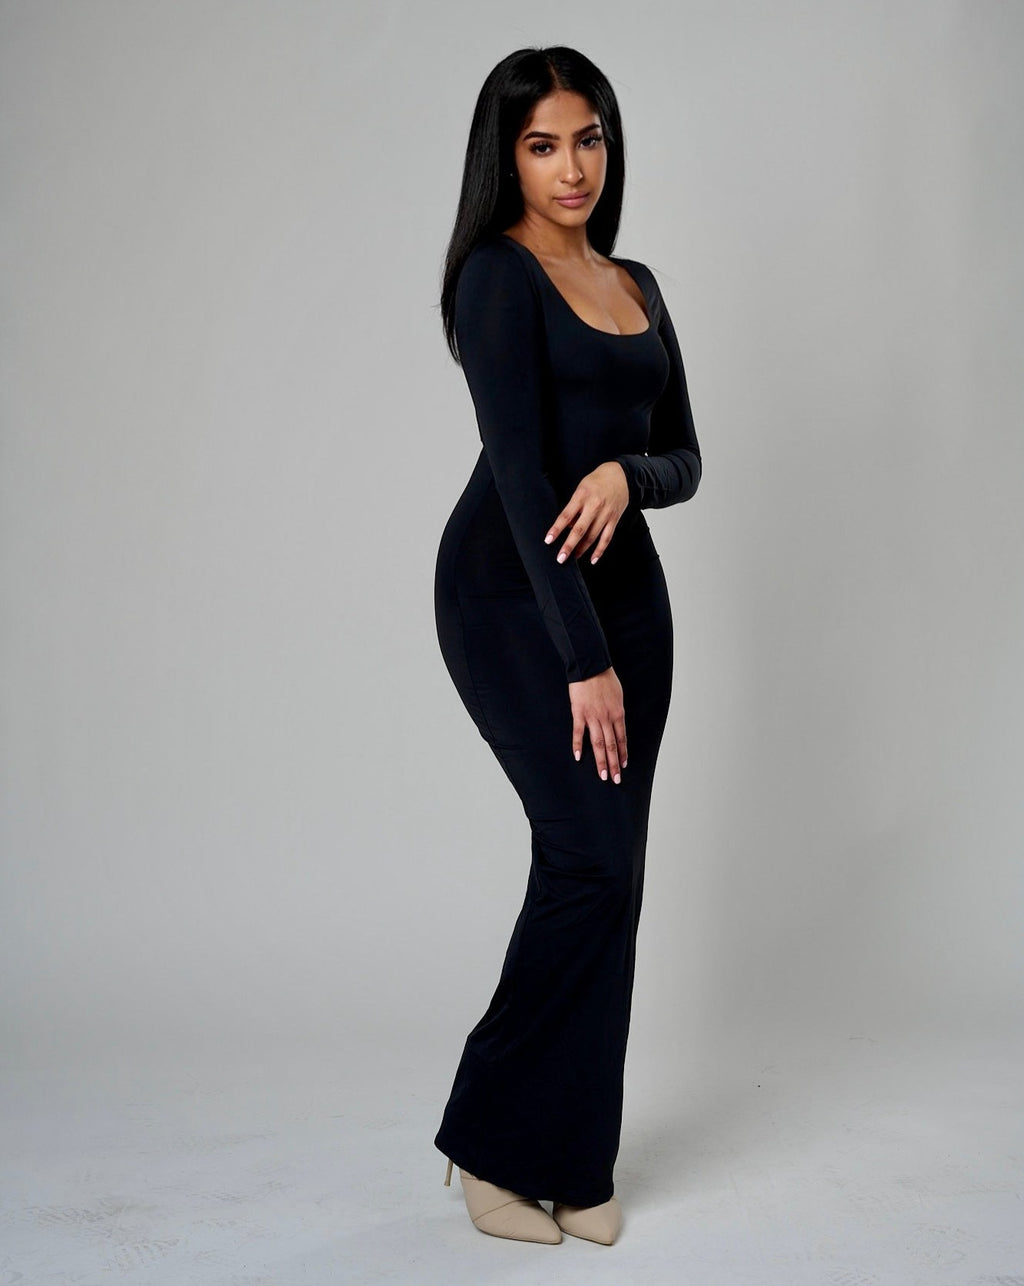 Sicri Smoothing Slip Dress 2.0 - Black – Fem Curves